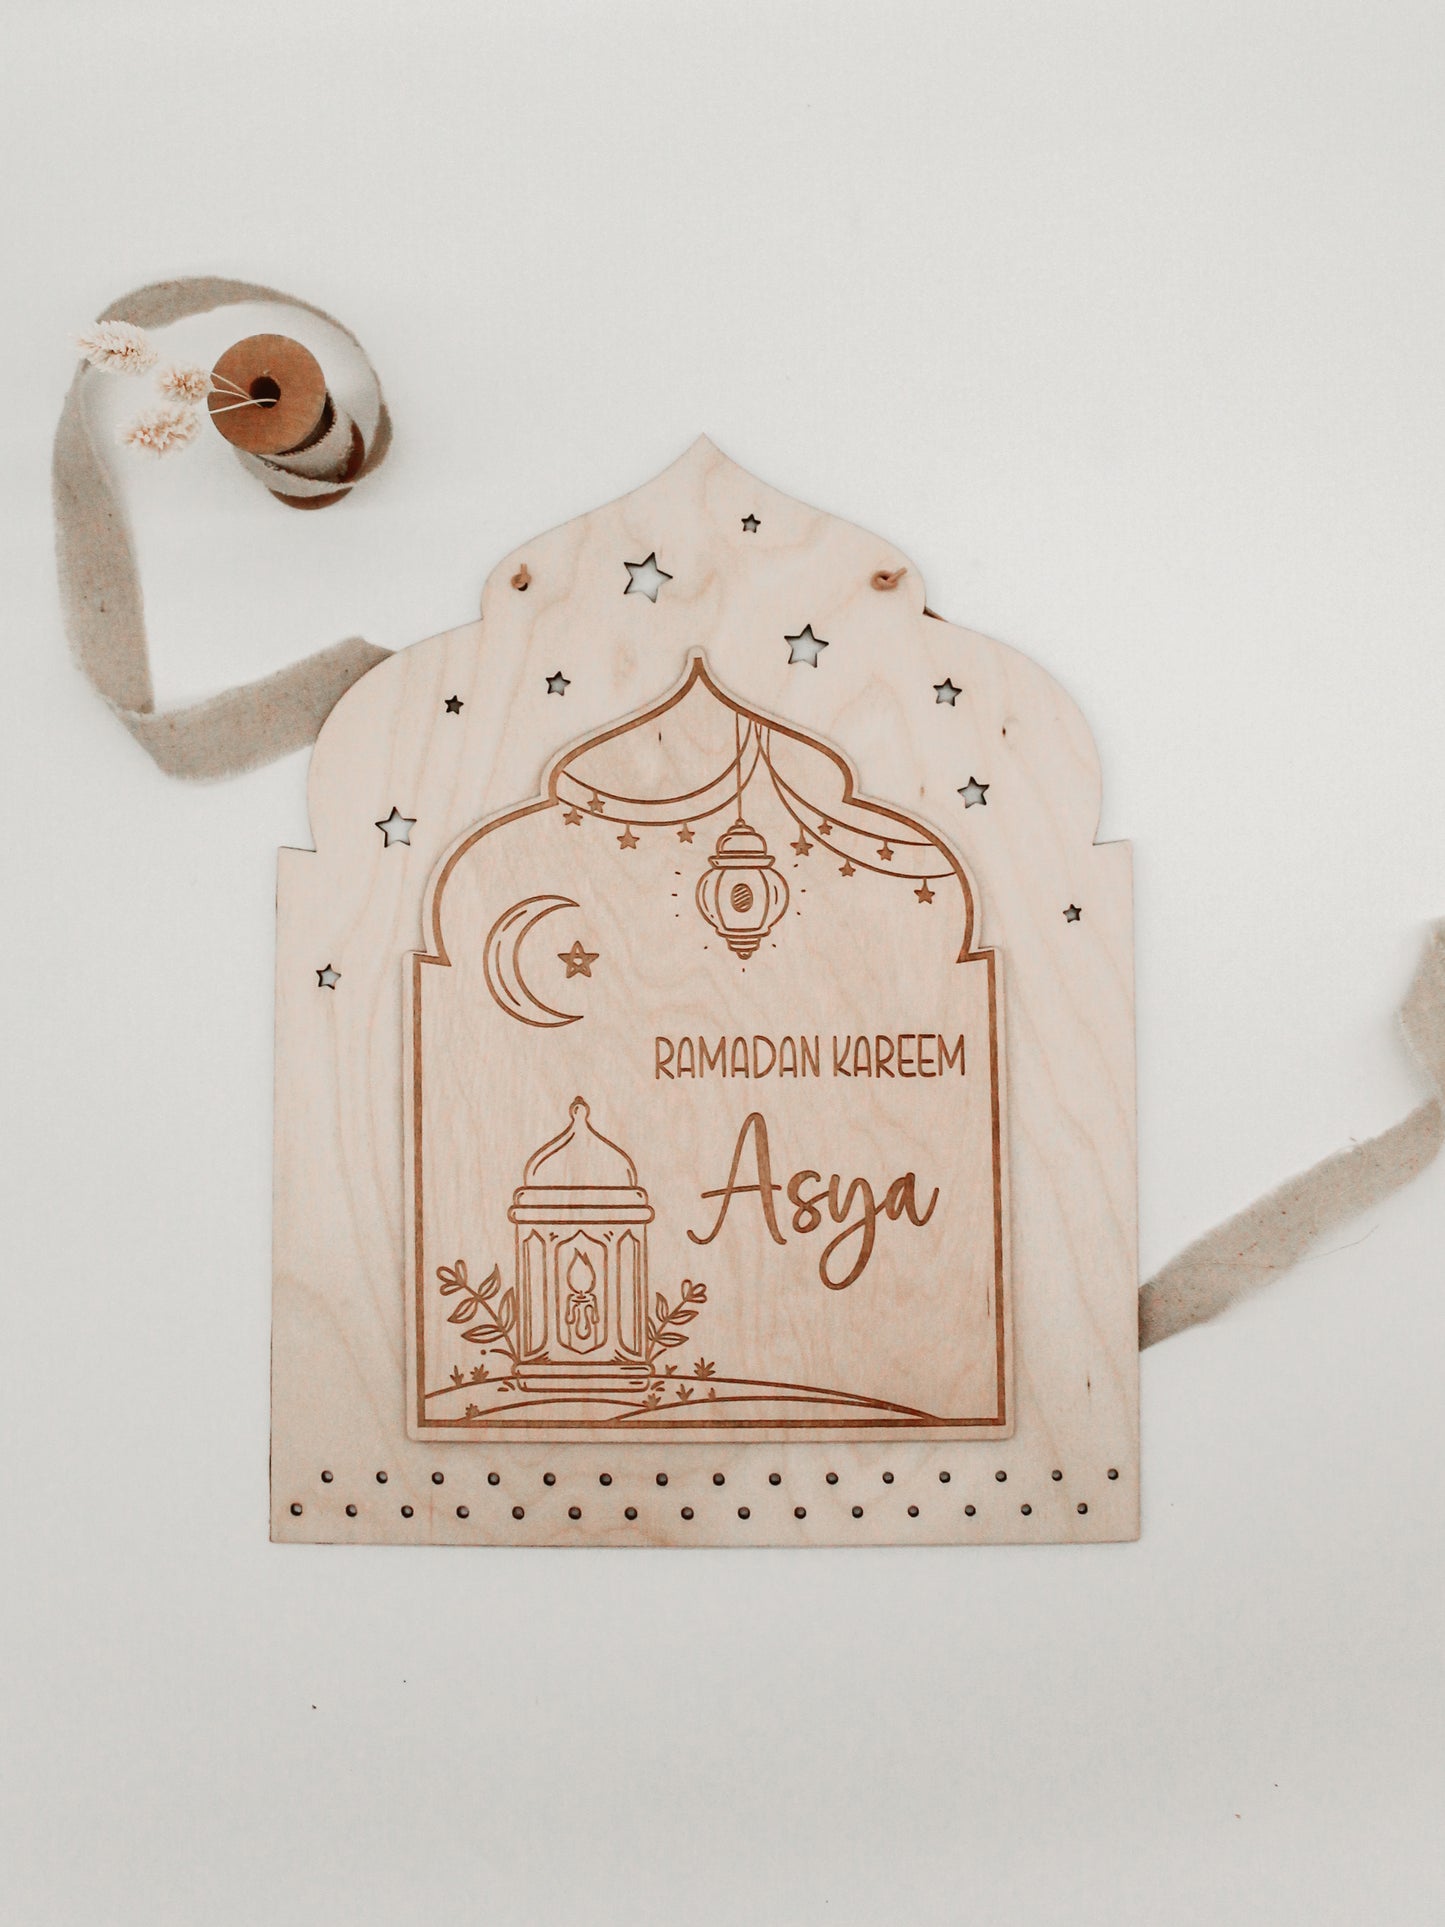 Ramadankalender personalisiert